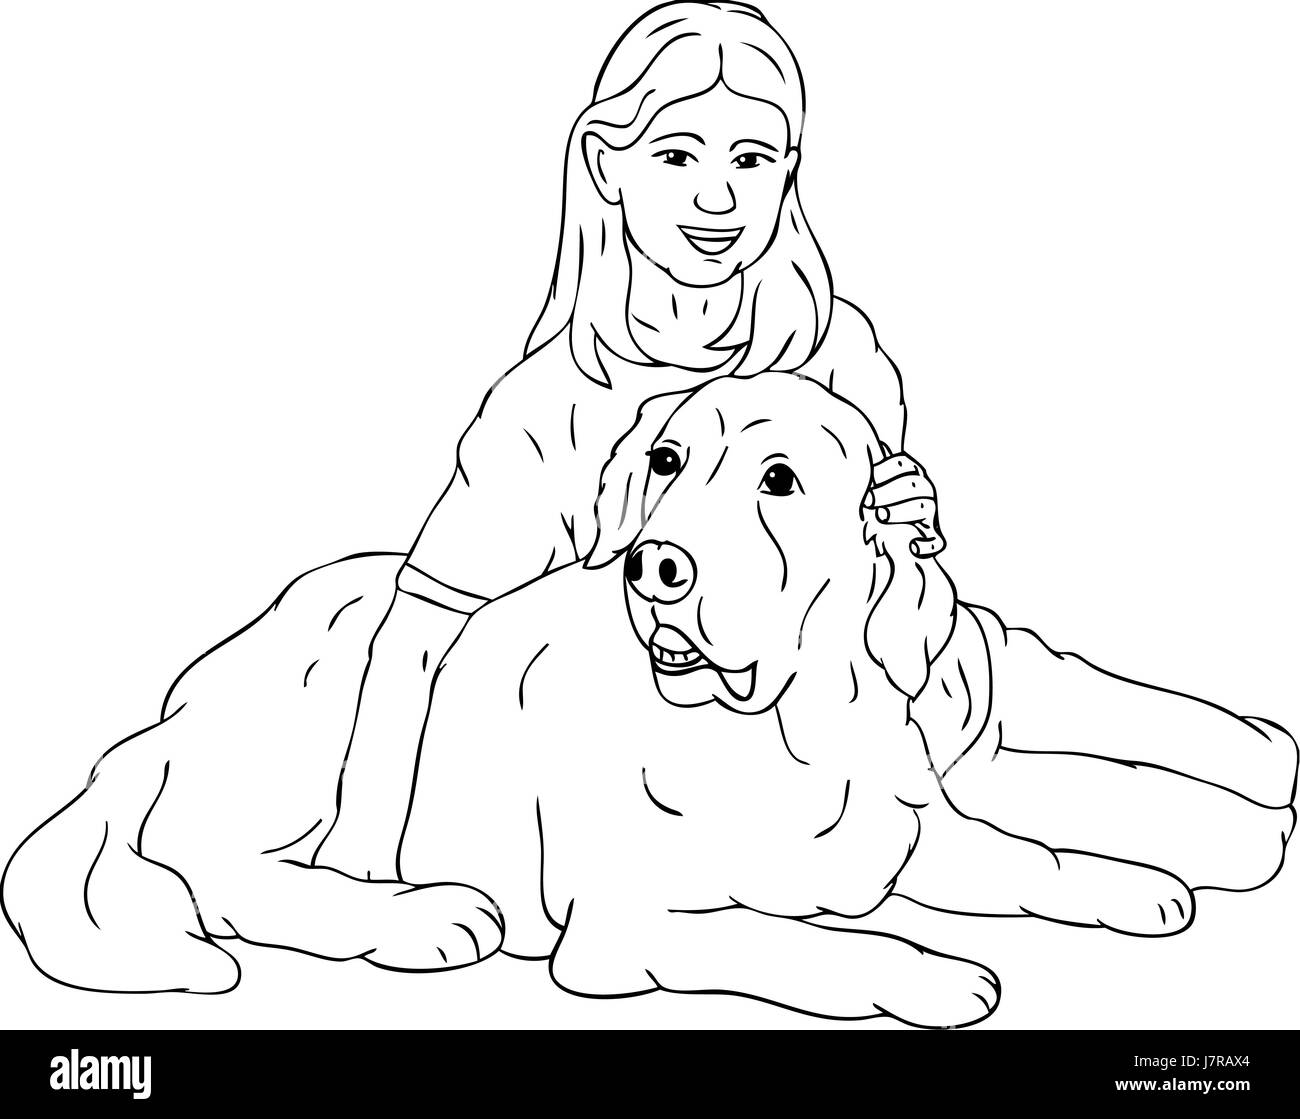 isolated colour dog illustration paint draw cartoon girl girls woman women  Stock Photo - Alamy